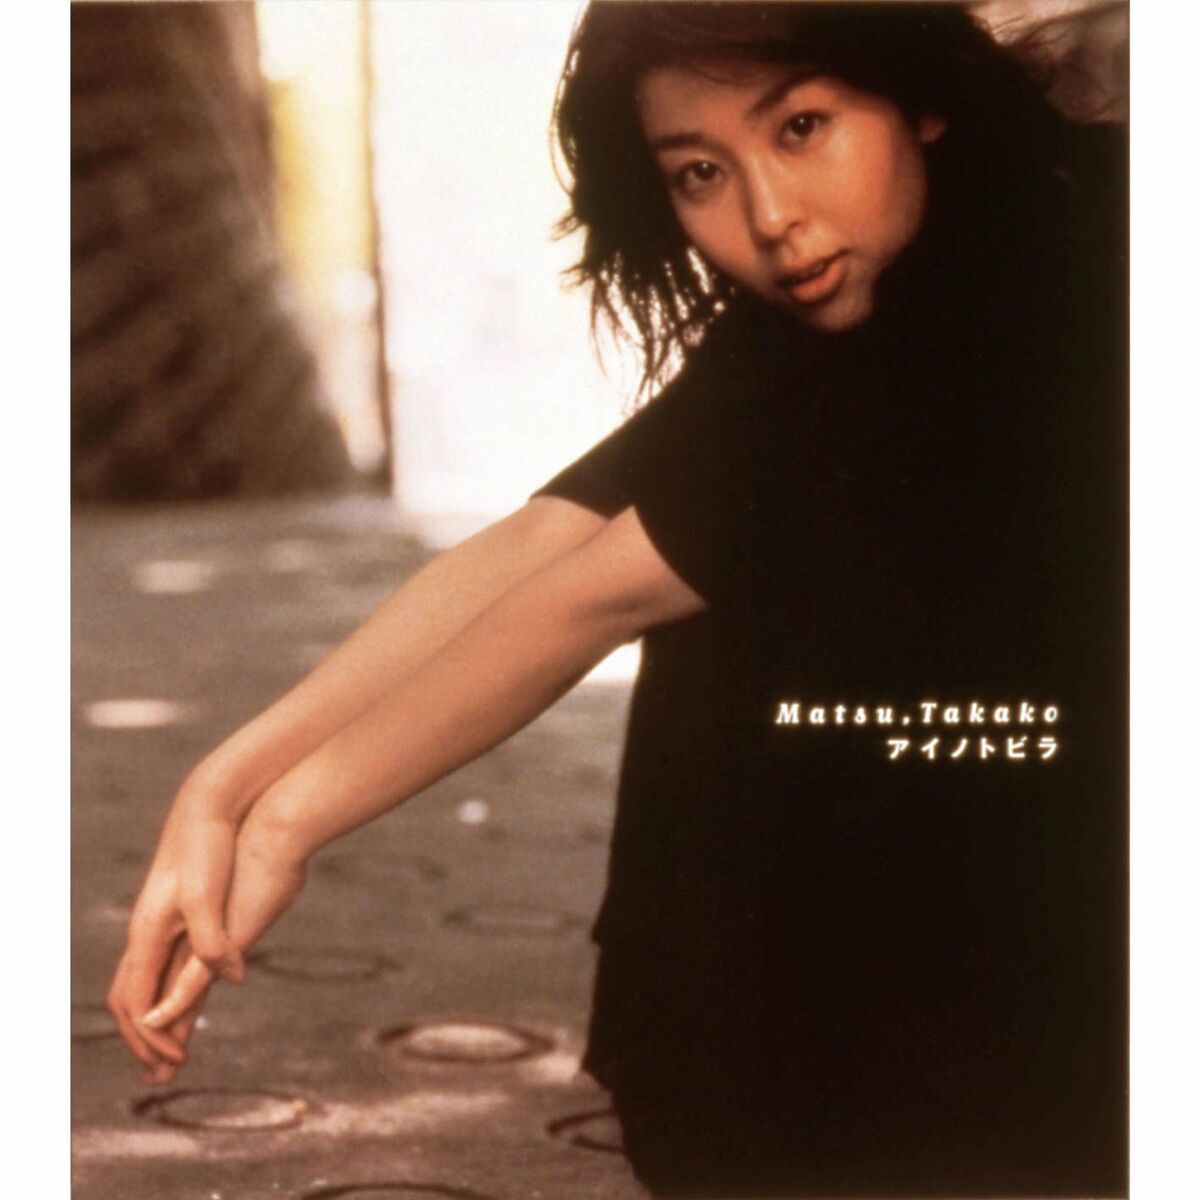 Takako Matsu: albums, songs, playlists | Listen on Deezer